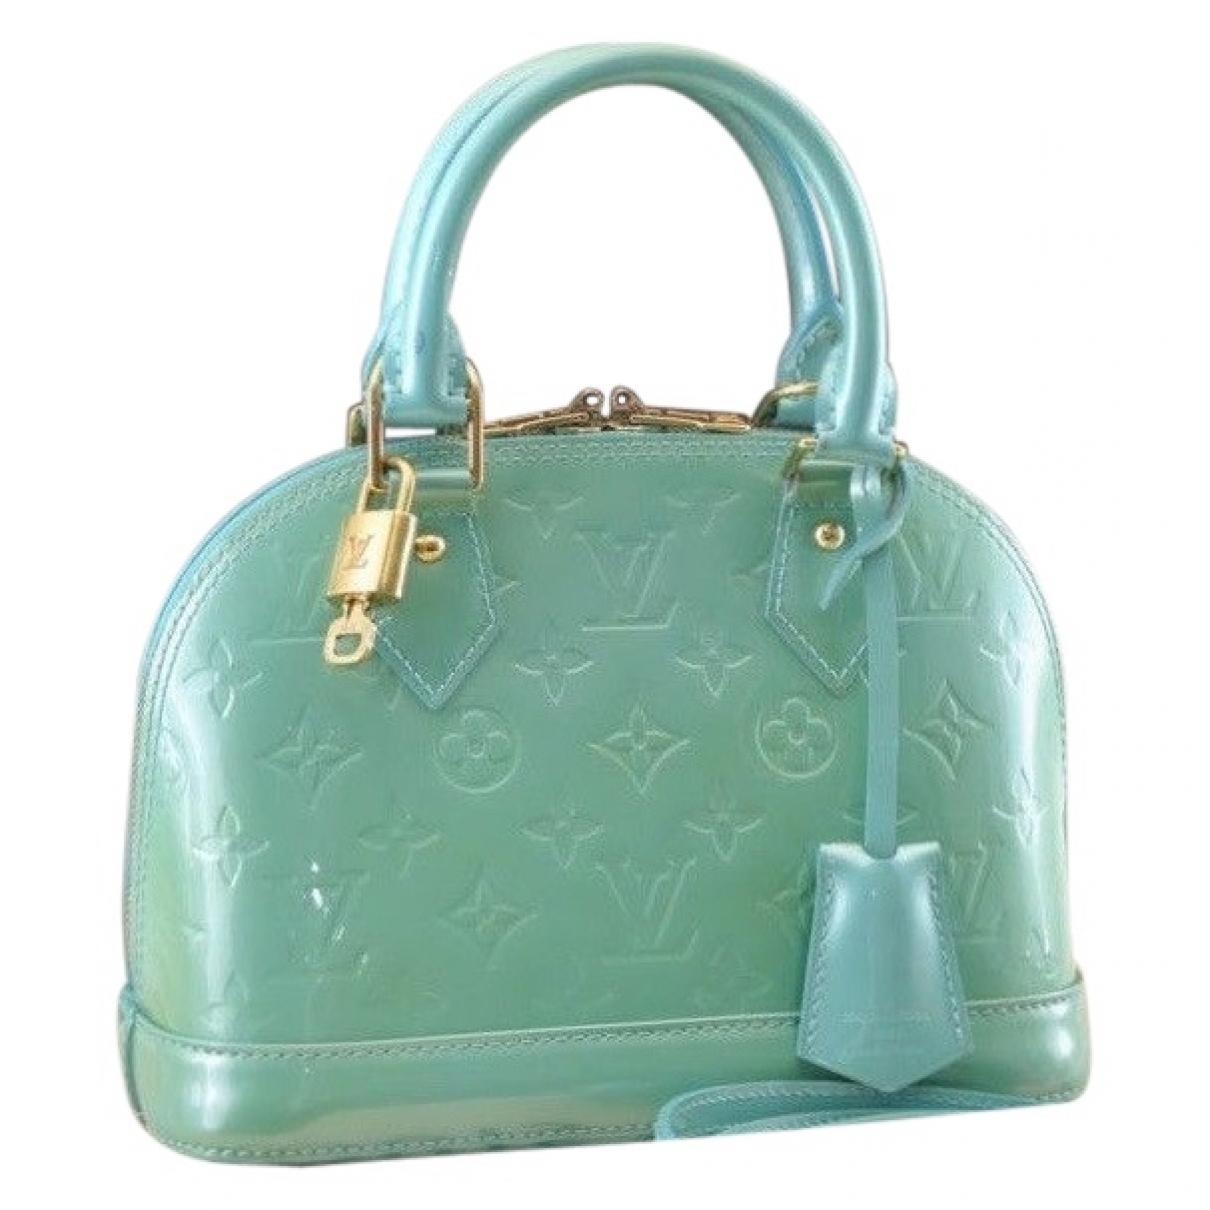 Louis Vuitton Alma Patent Leather Handbag in Green - Lyst